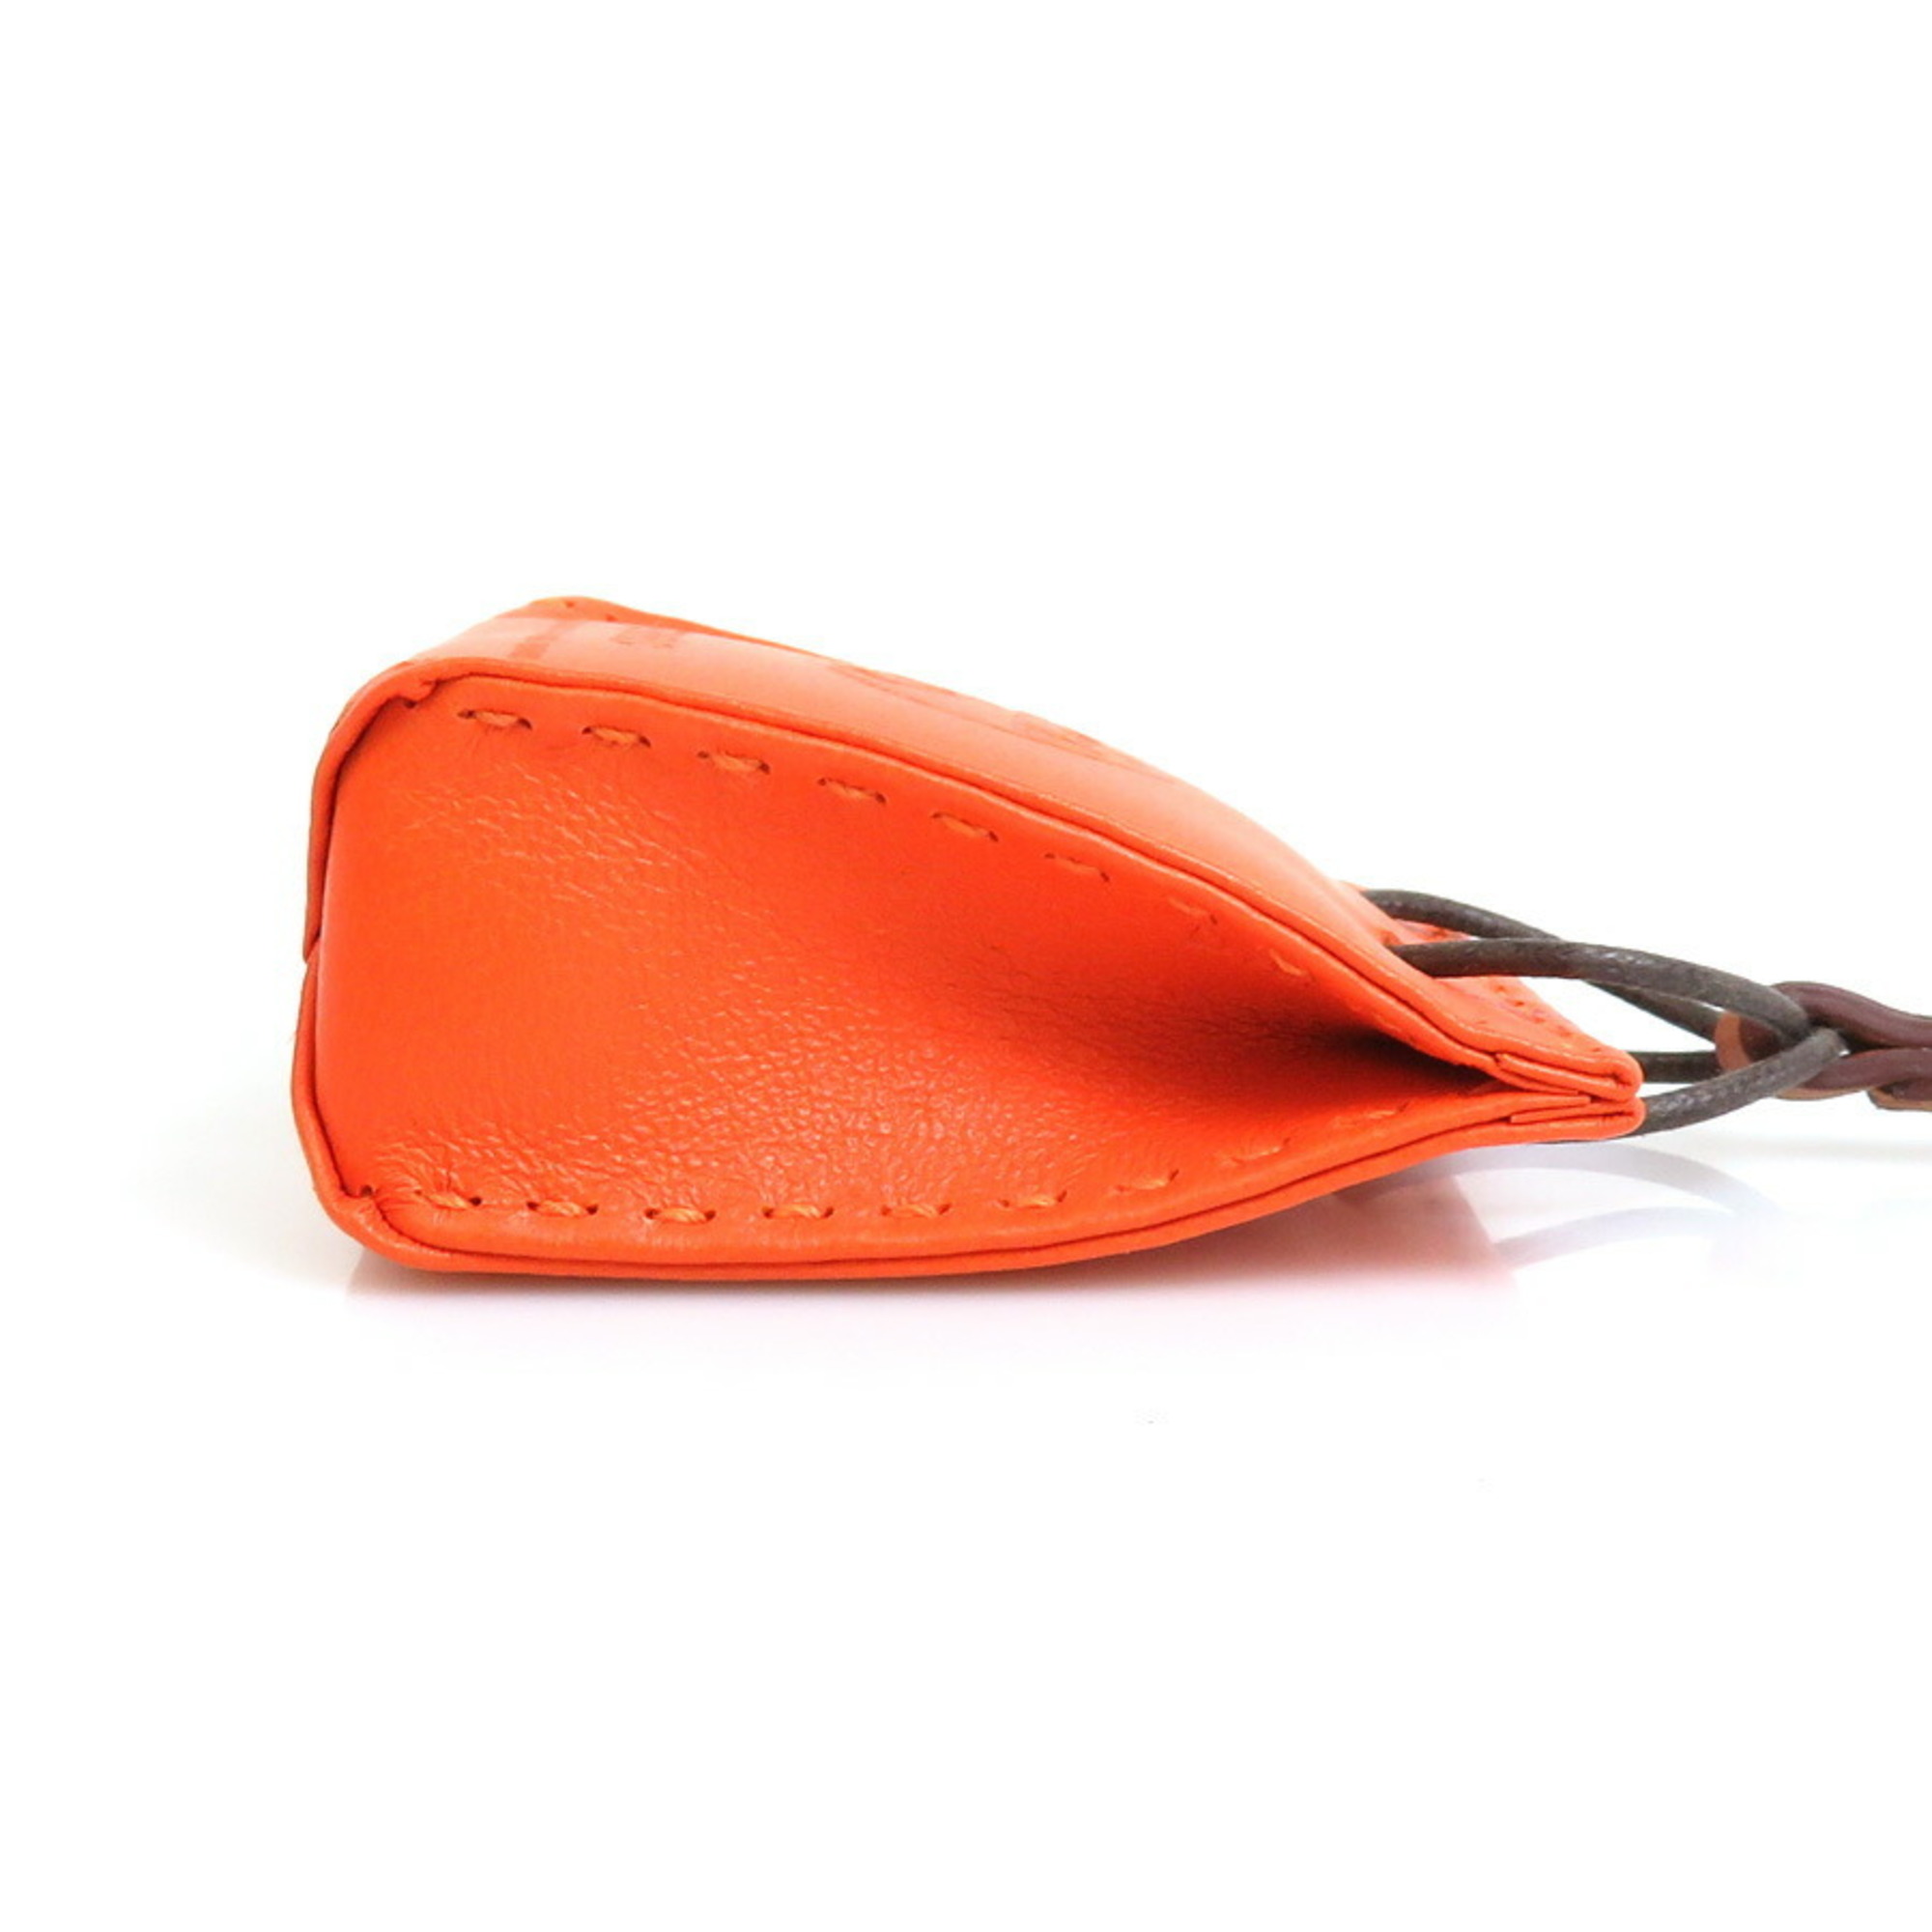 HERMES Charm Sack Orange Leather Orange/Brown Unisex